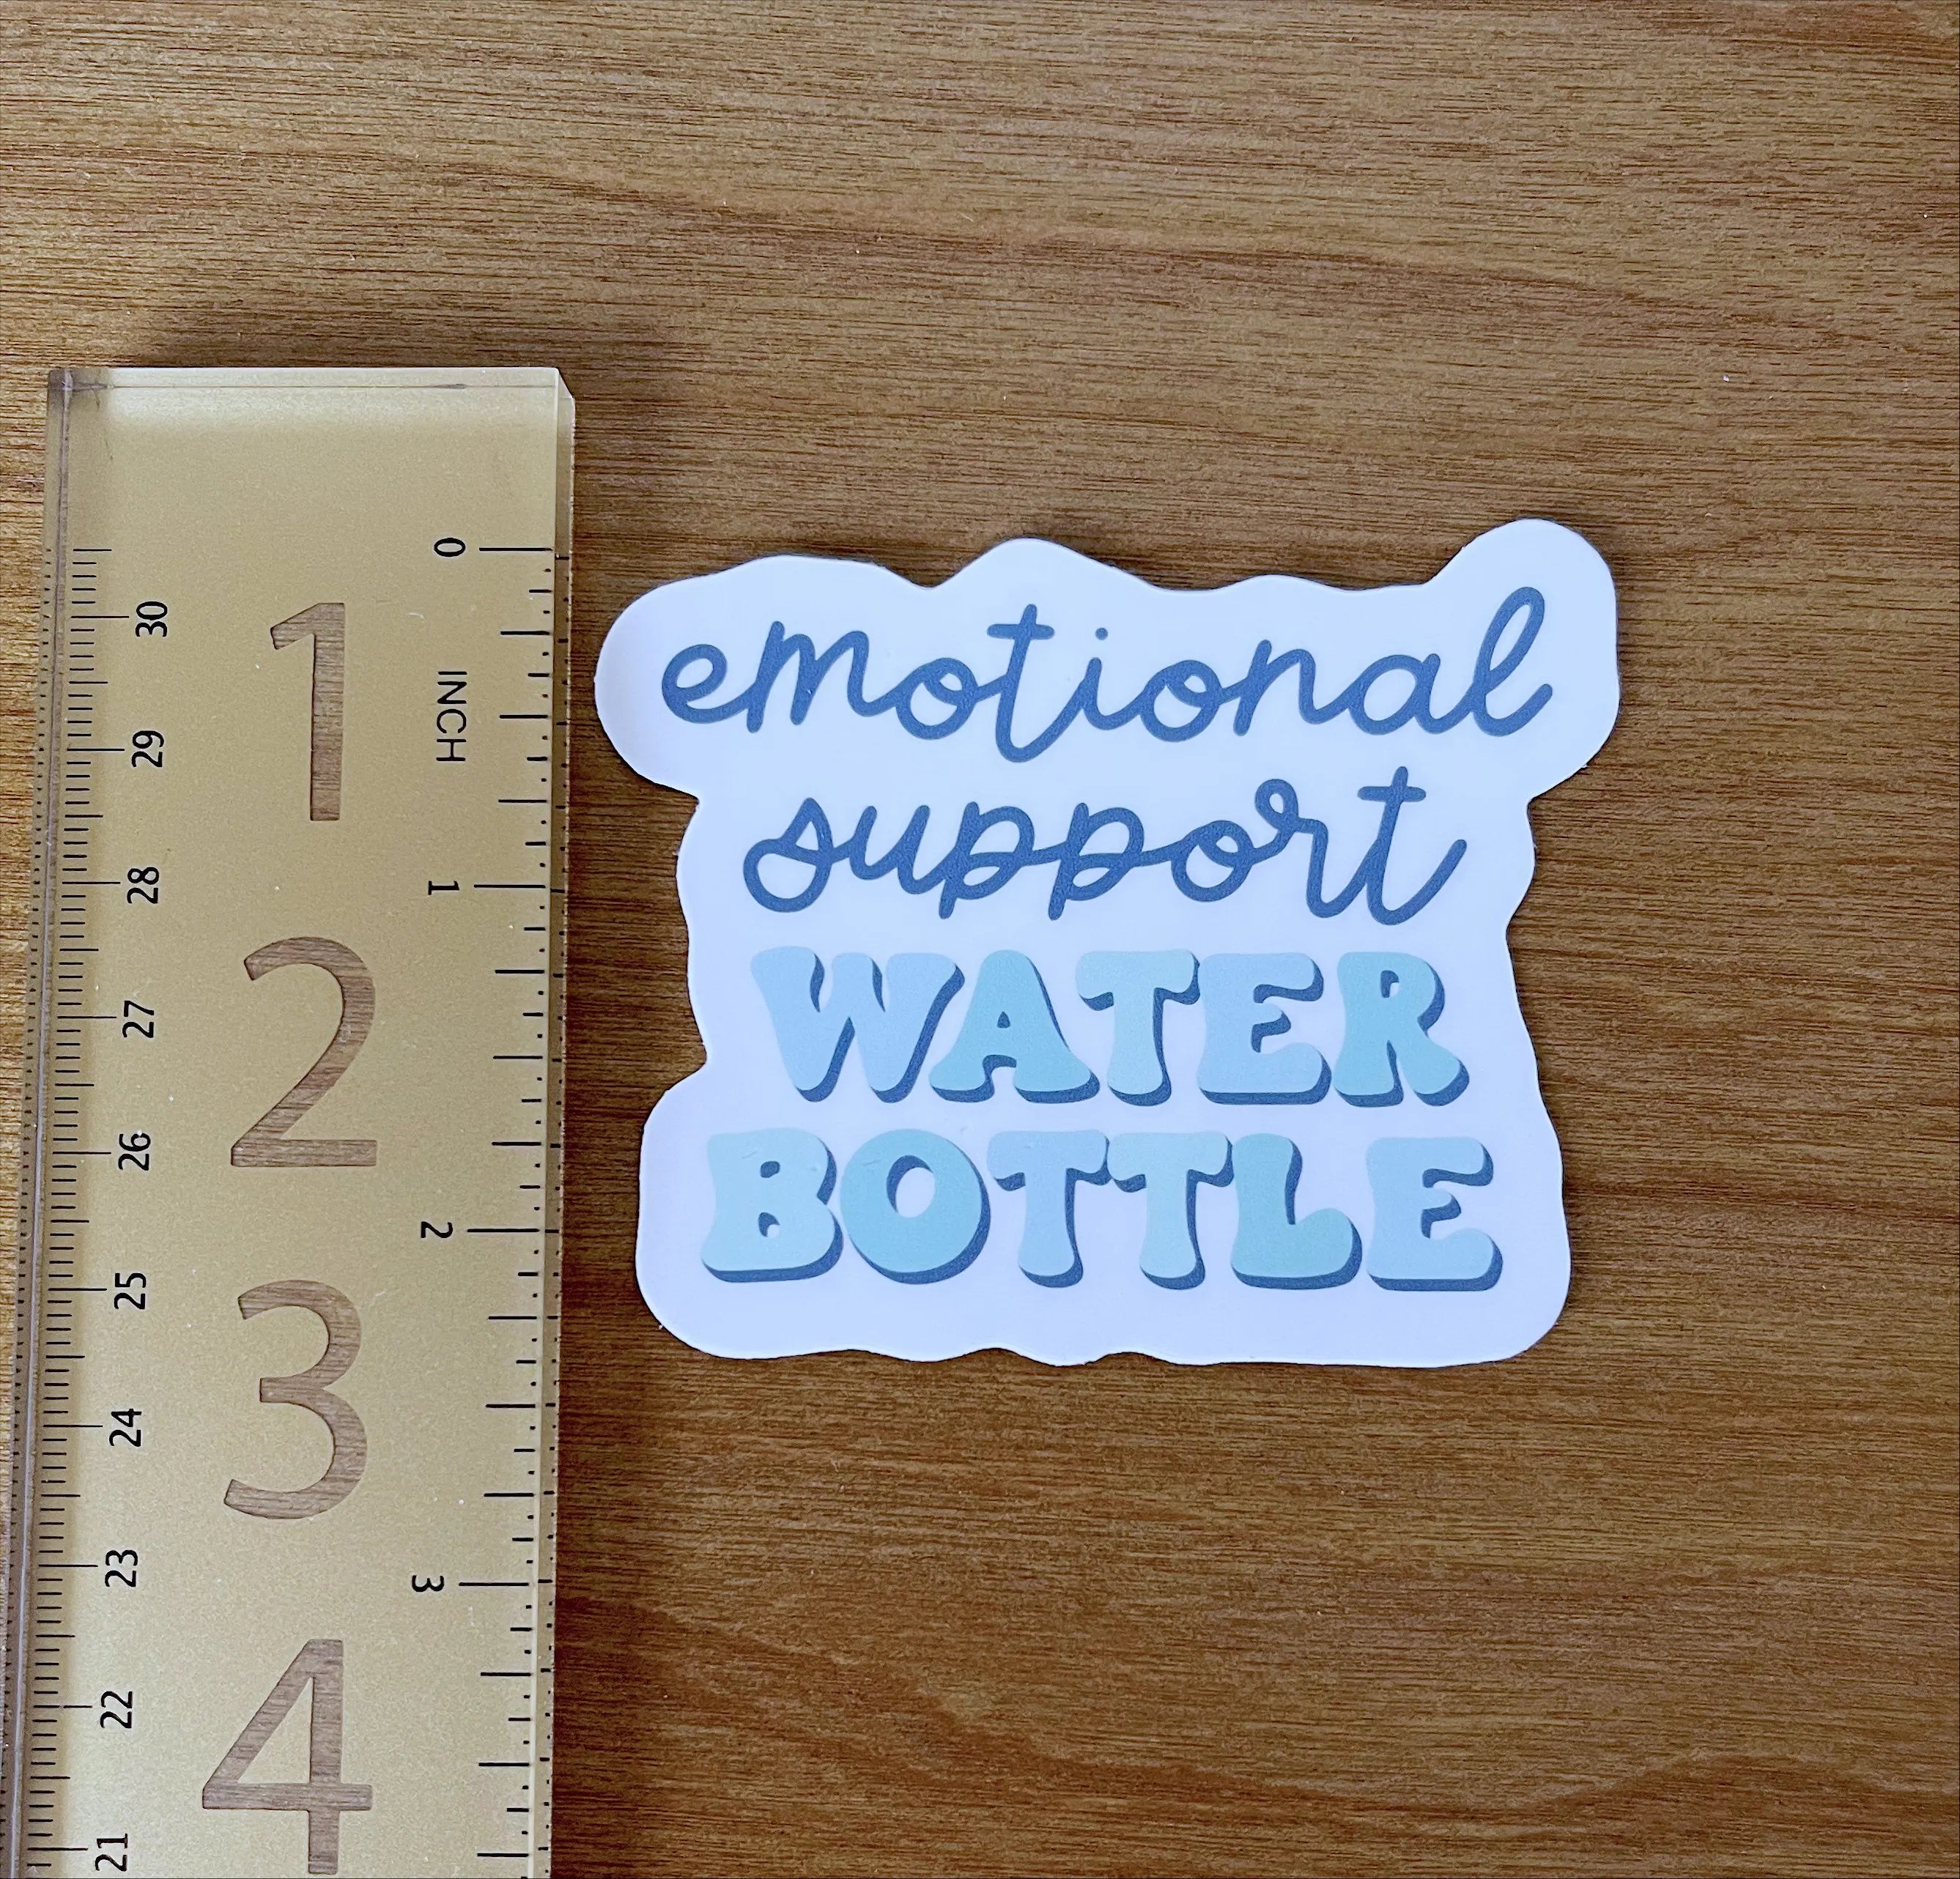 Emotional support water bottle sticker MangoIllustrated